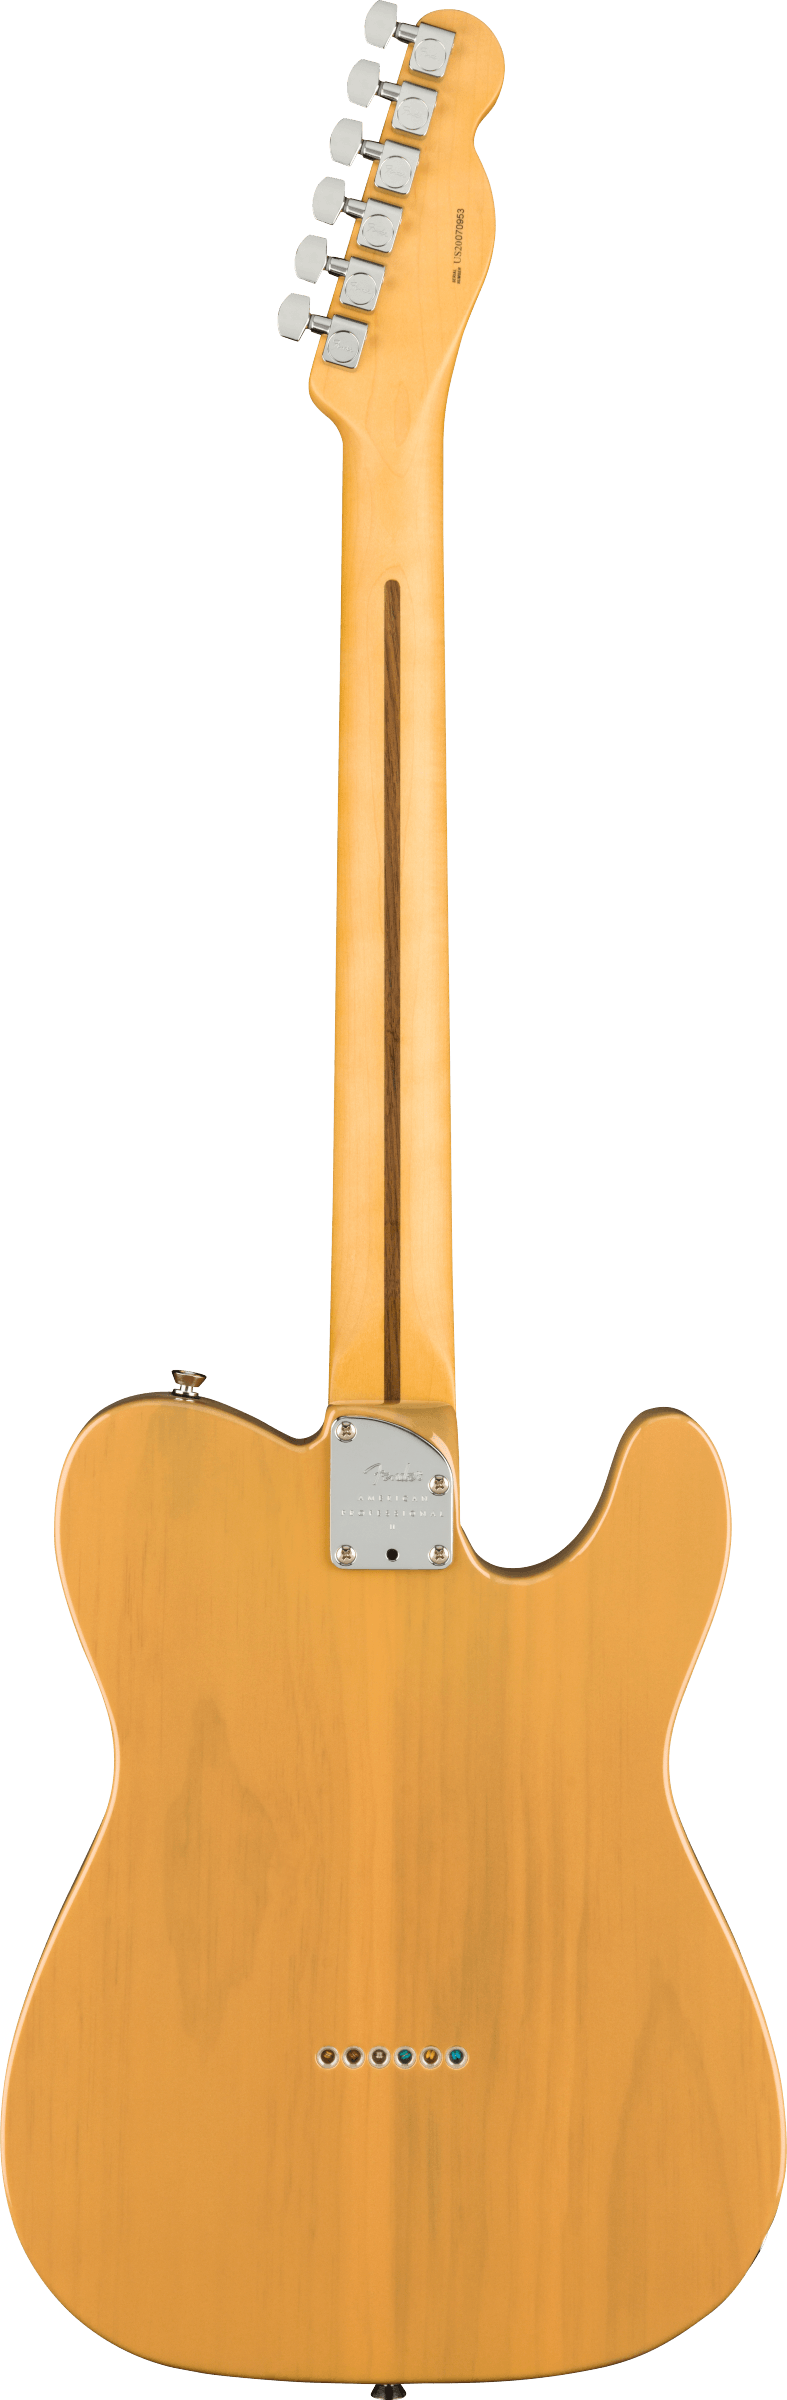 American Professional II Telecaster Left-Hand Maple Fingerboard, Butterscotch Blonde